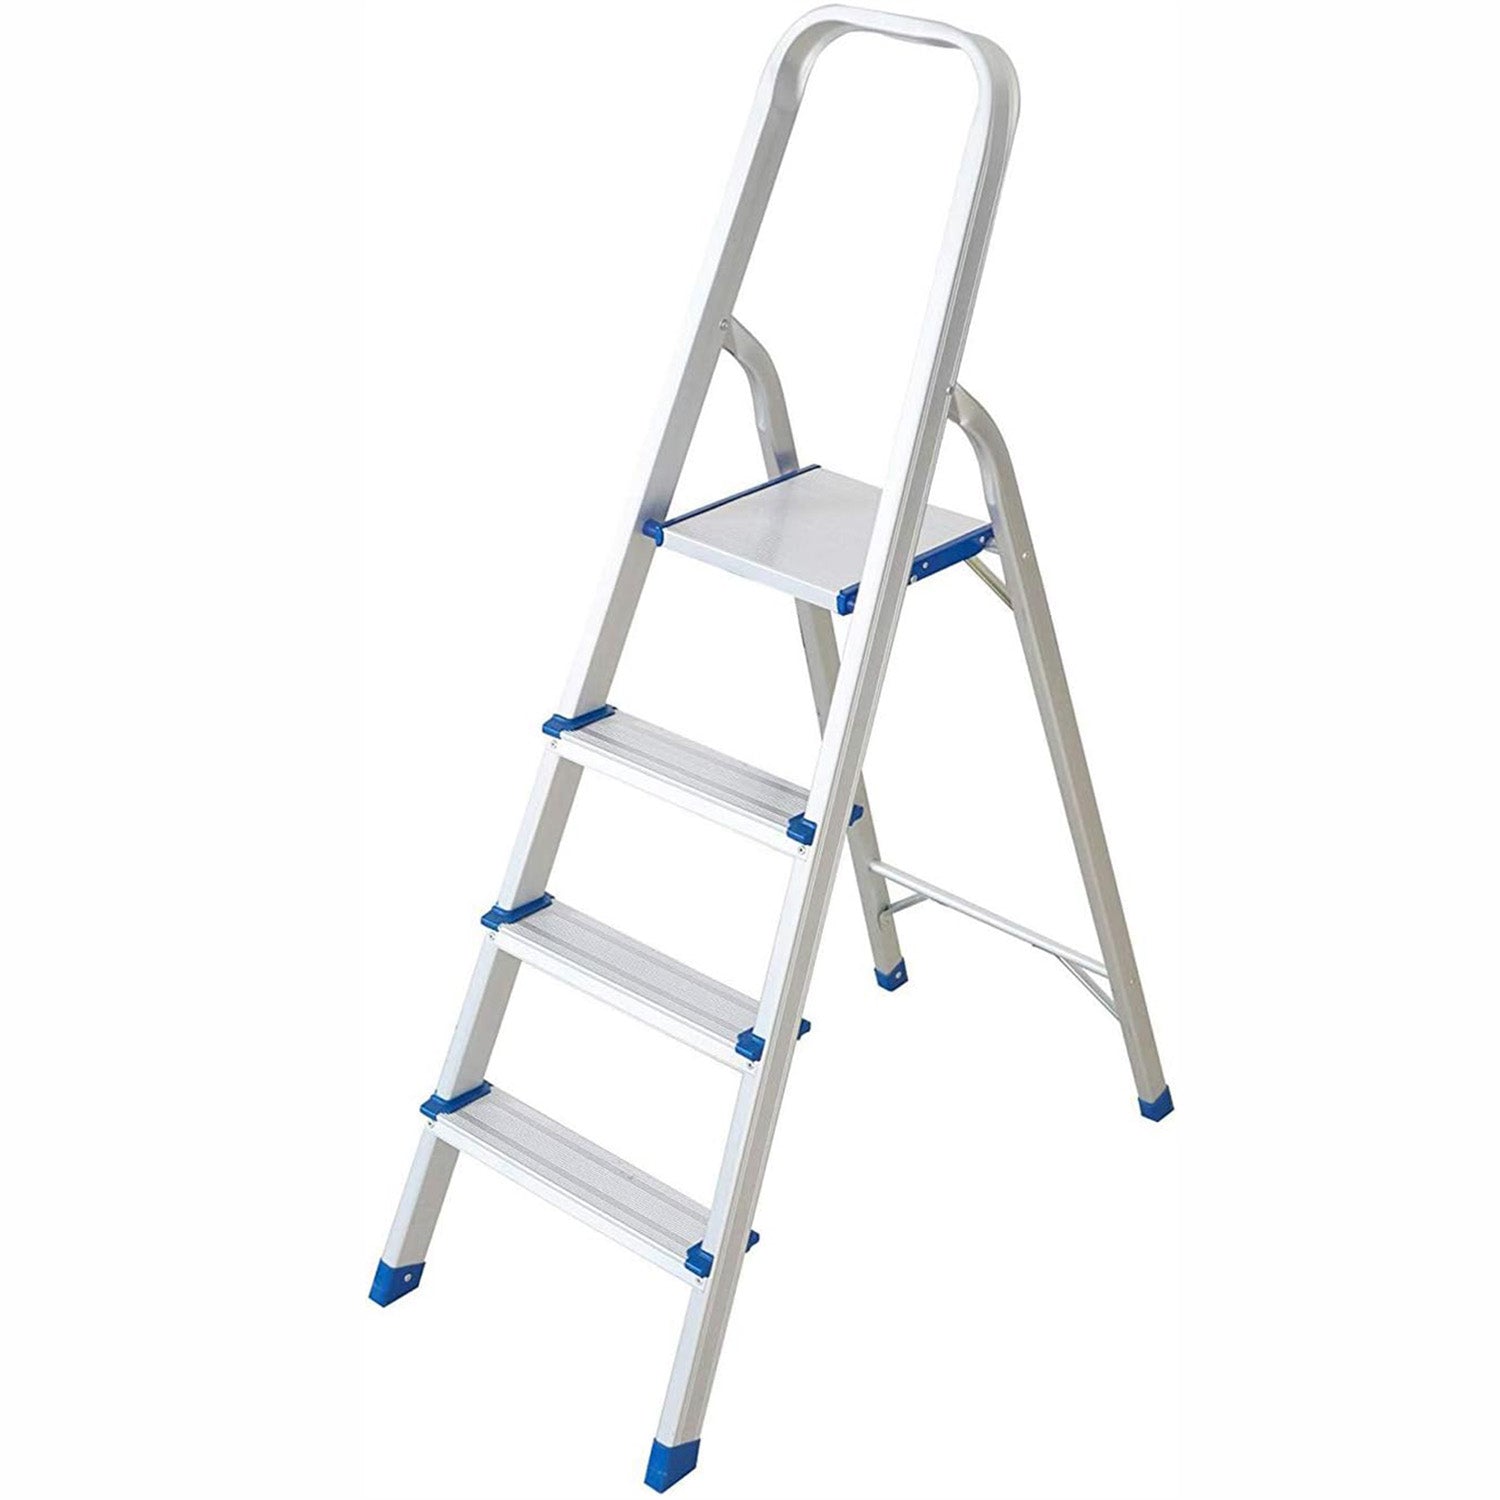 Foldable Lightweight Aluminum 4 Step Ladder with Anti-Slip, Household